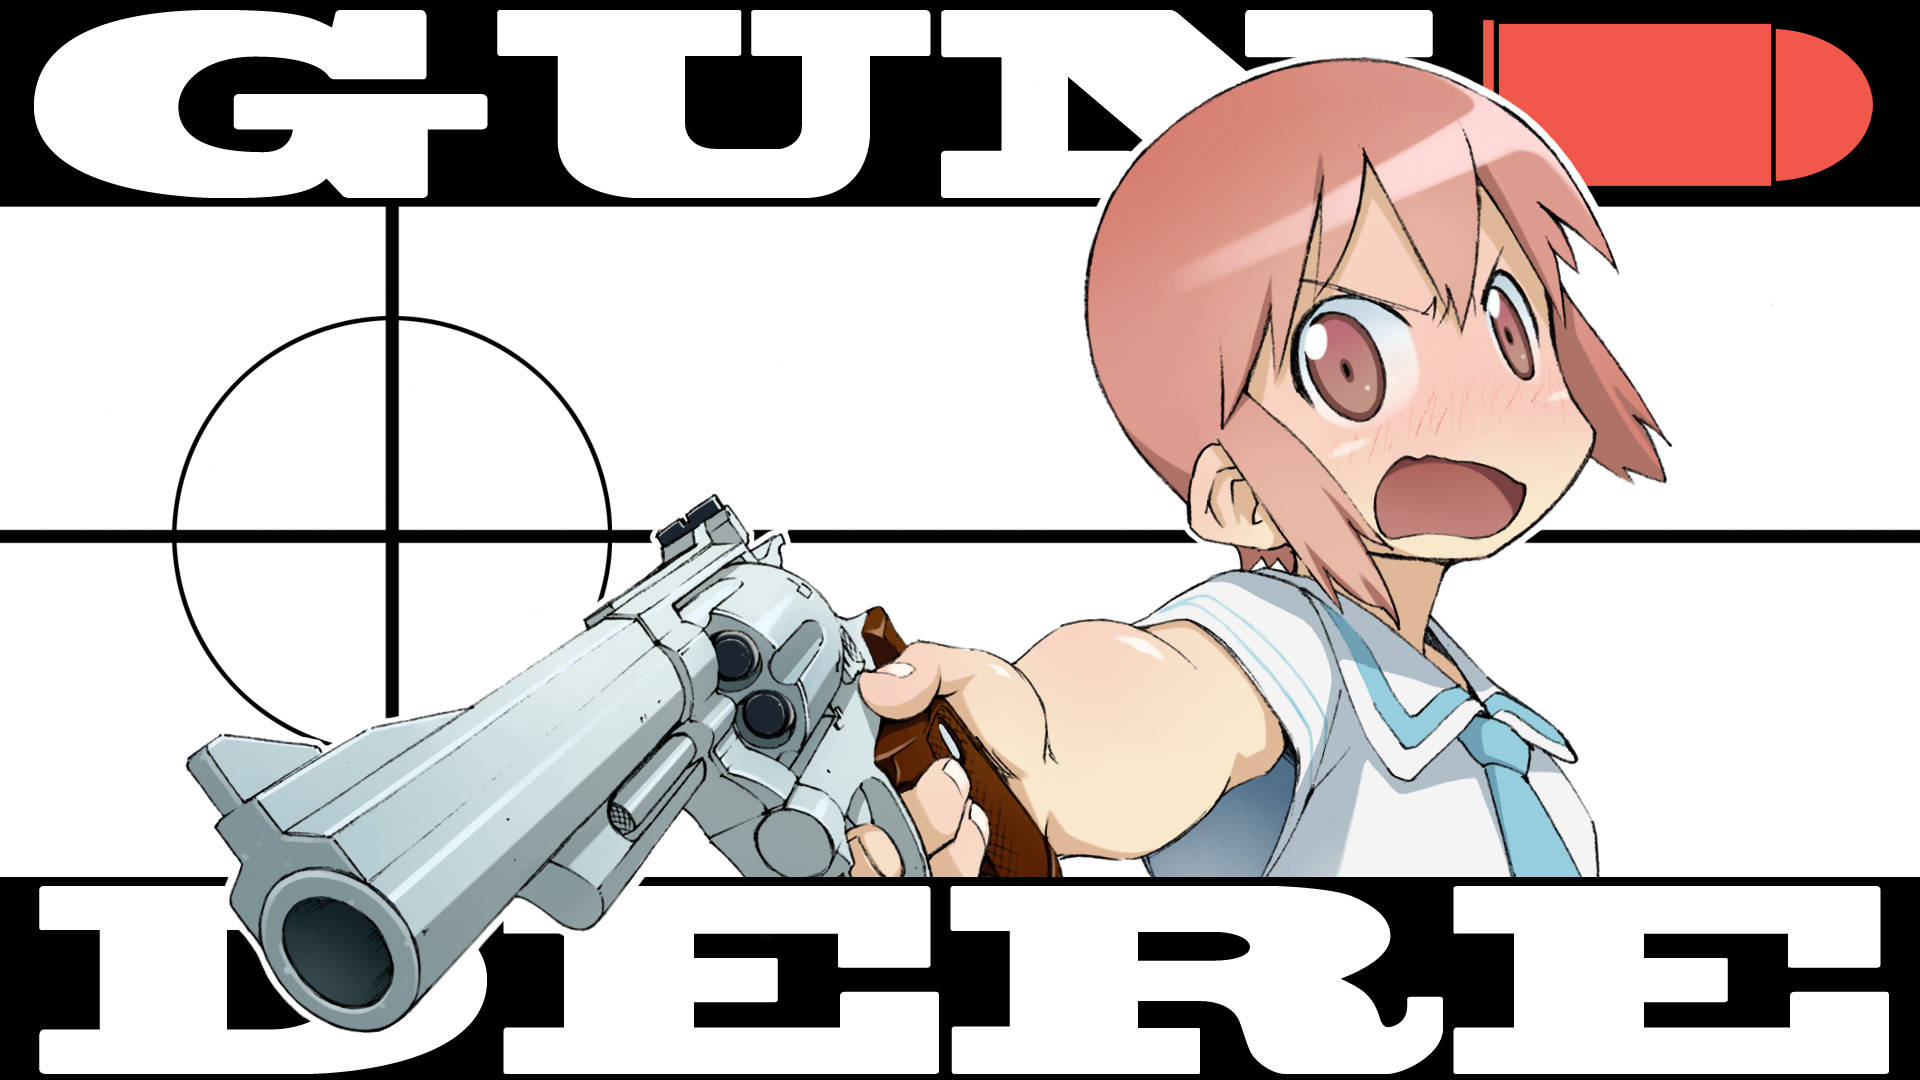 Nichijoumisato Gun Dere Can Be Translated Into Italian As 